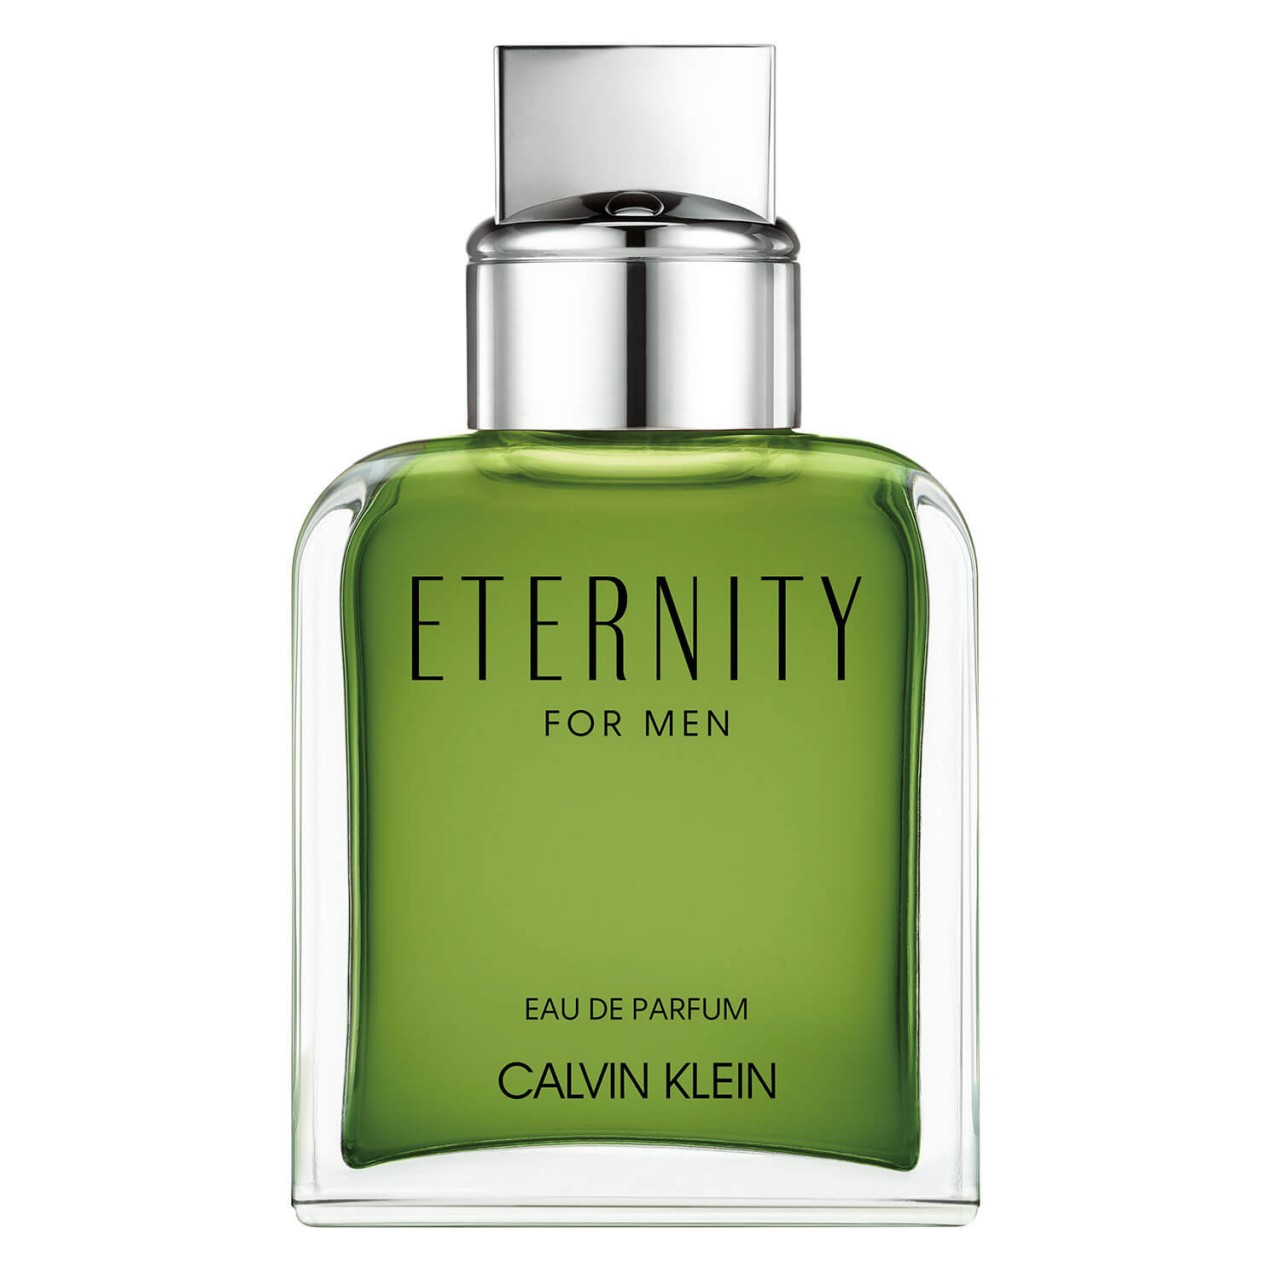 Eternity - Male Eau de Parfum von Calvin Klein